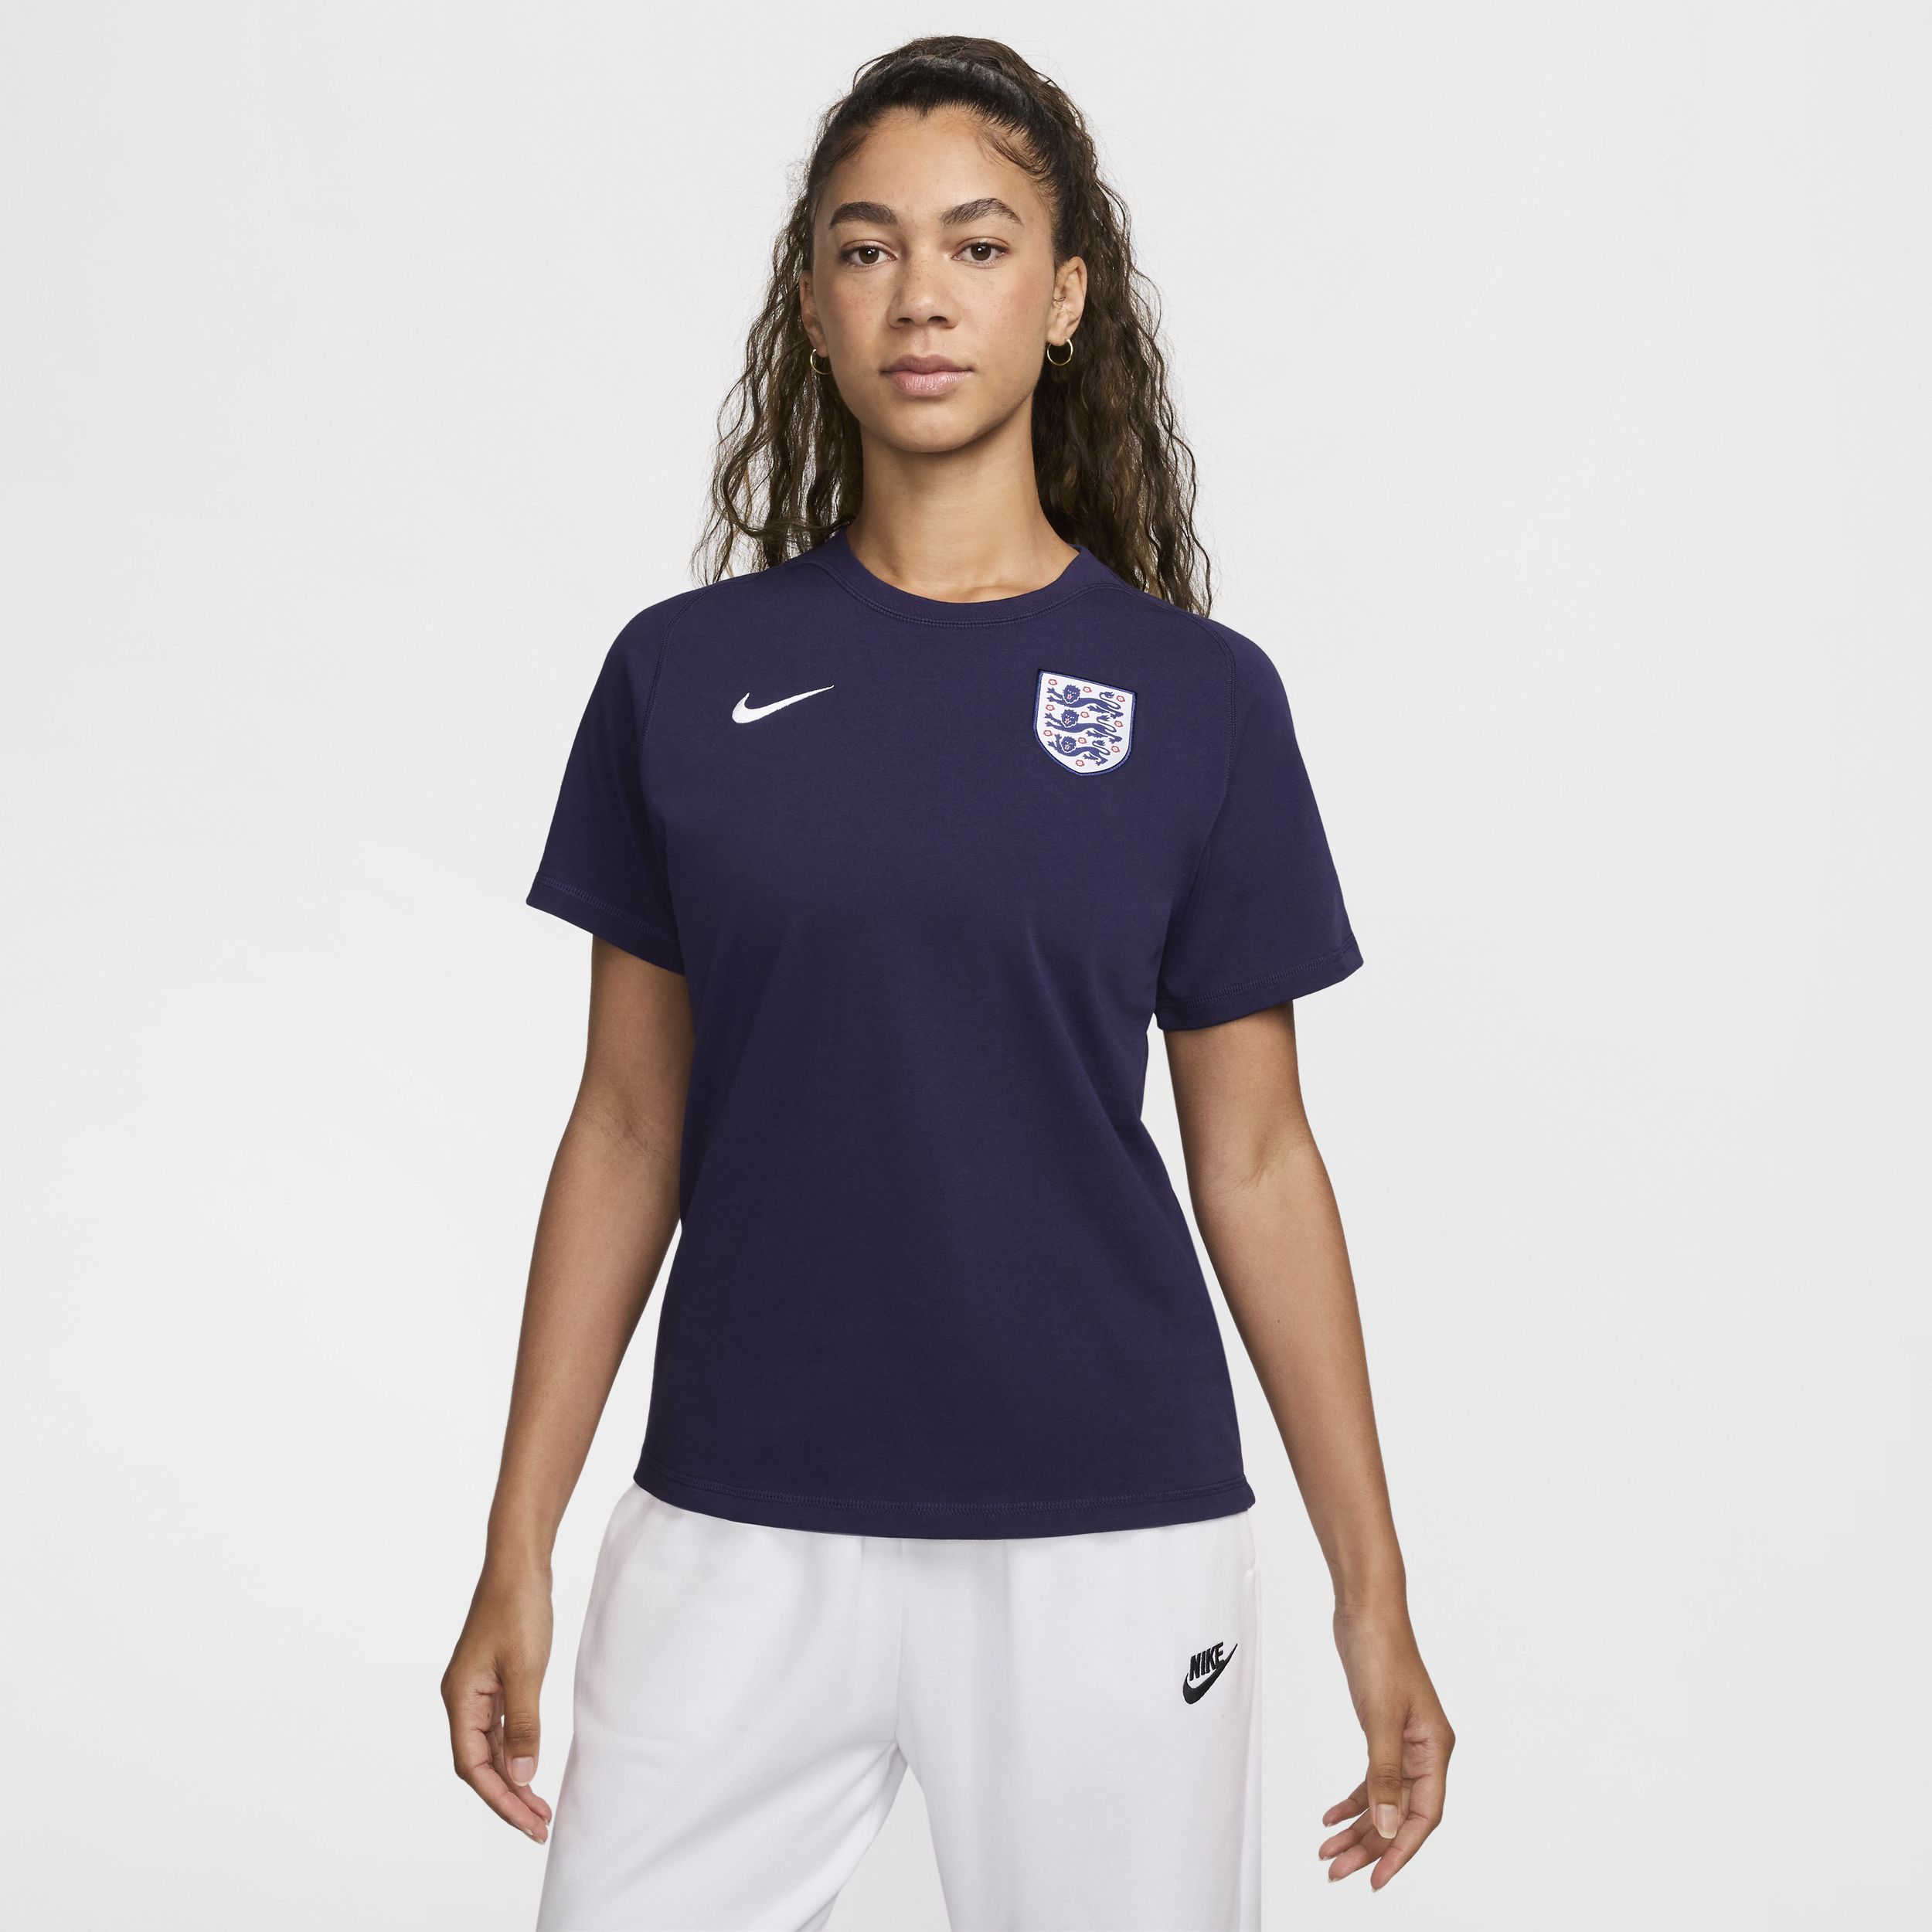 Maglia da calcio a manica corta Nike Inghilterra Travel - Viola